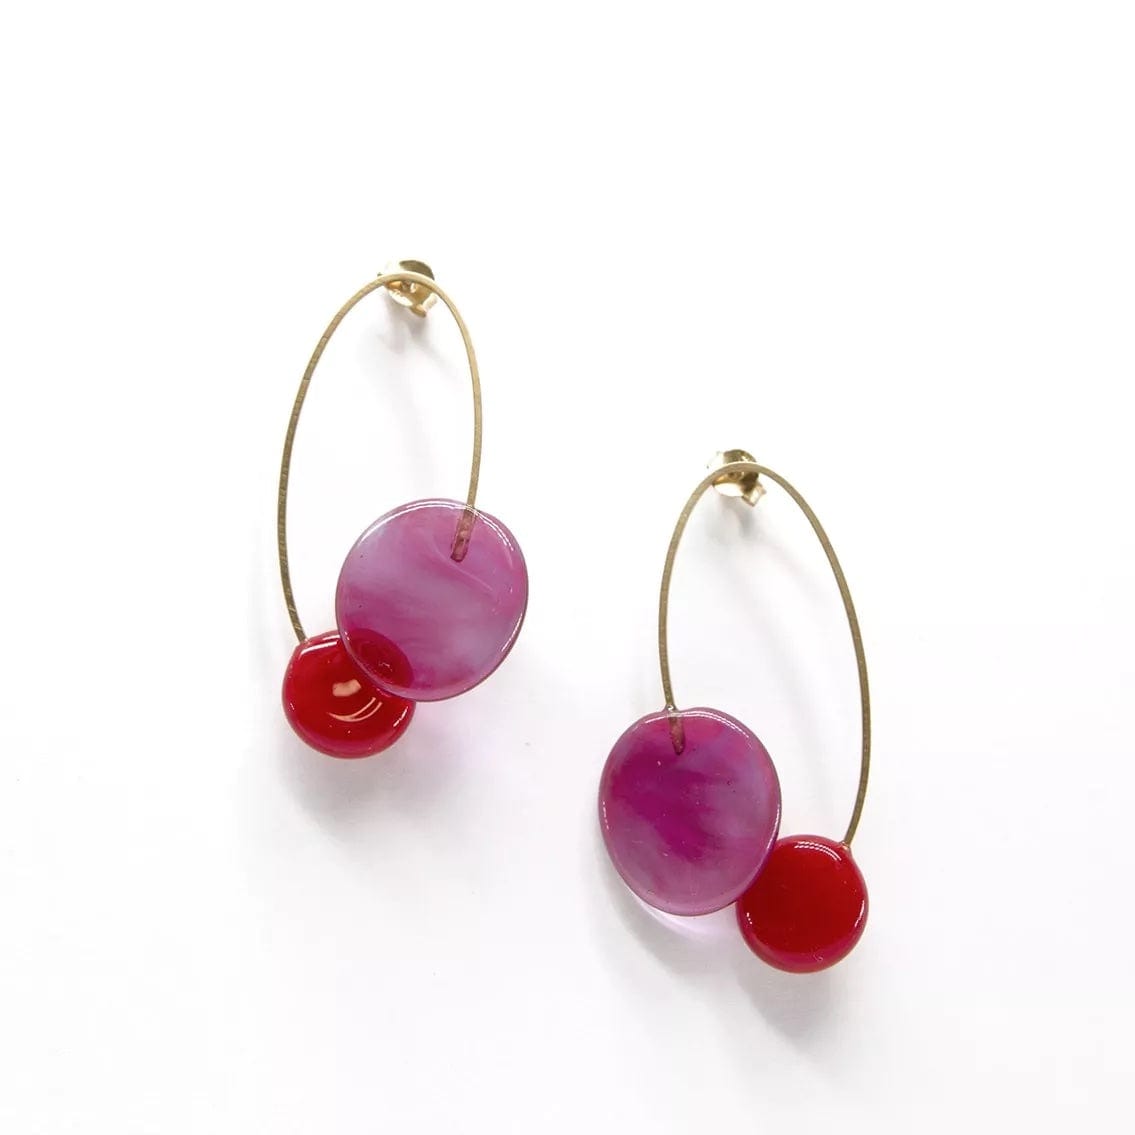 Elia earrings with Murano glass - Premium Earrings - Shop now at San Rocco Italia